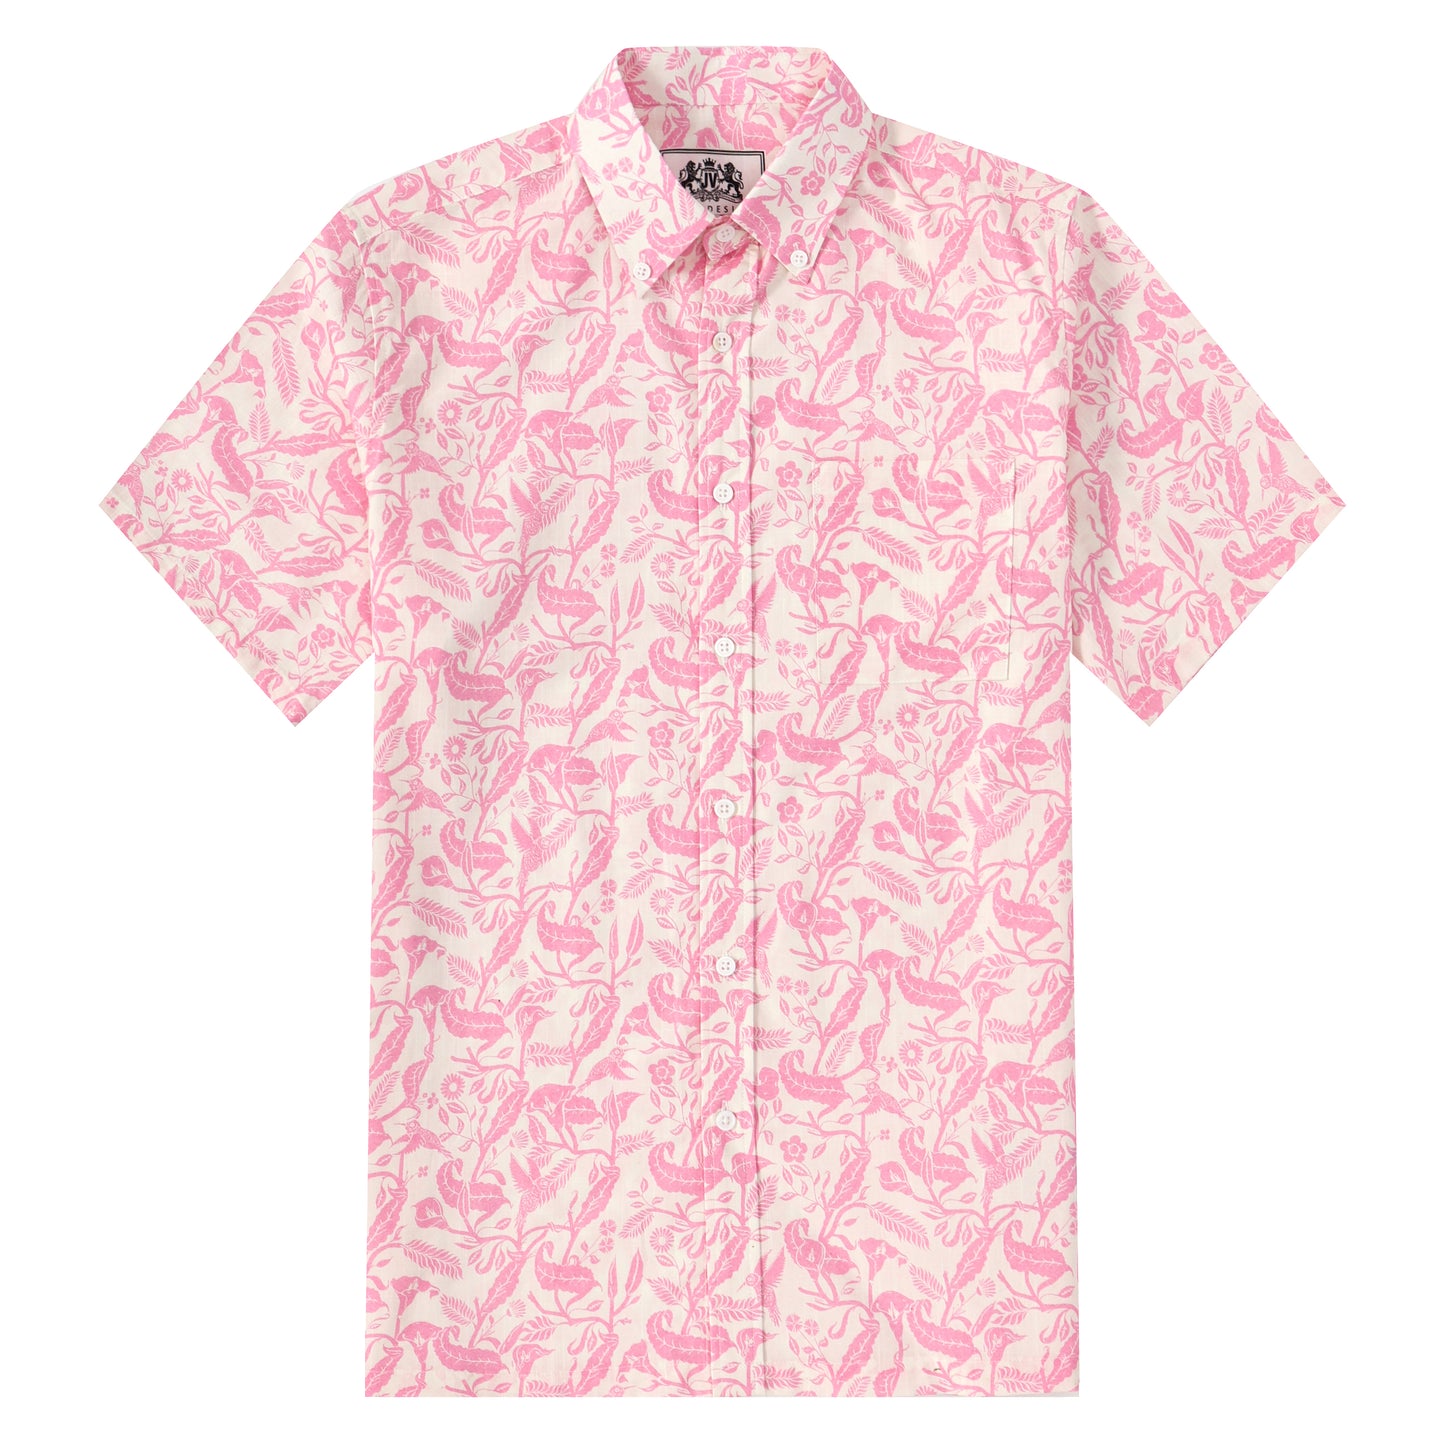 Pink Paisley Pattern Button Short Sleeve Shirt